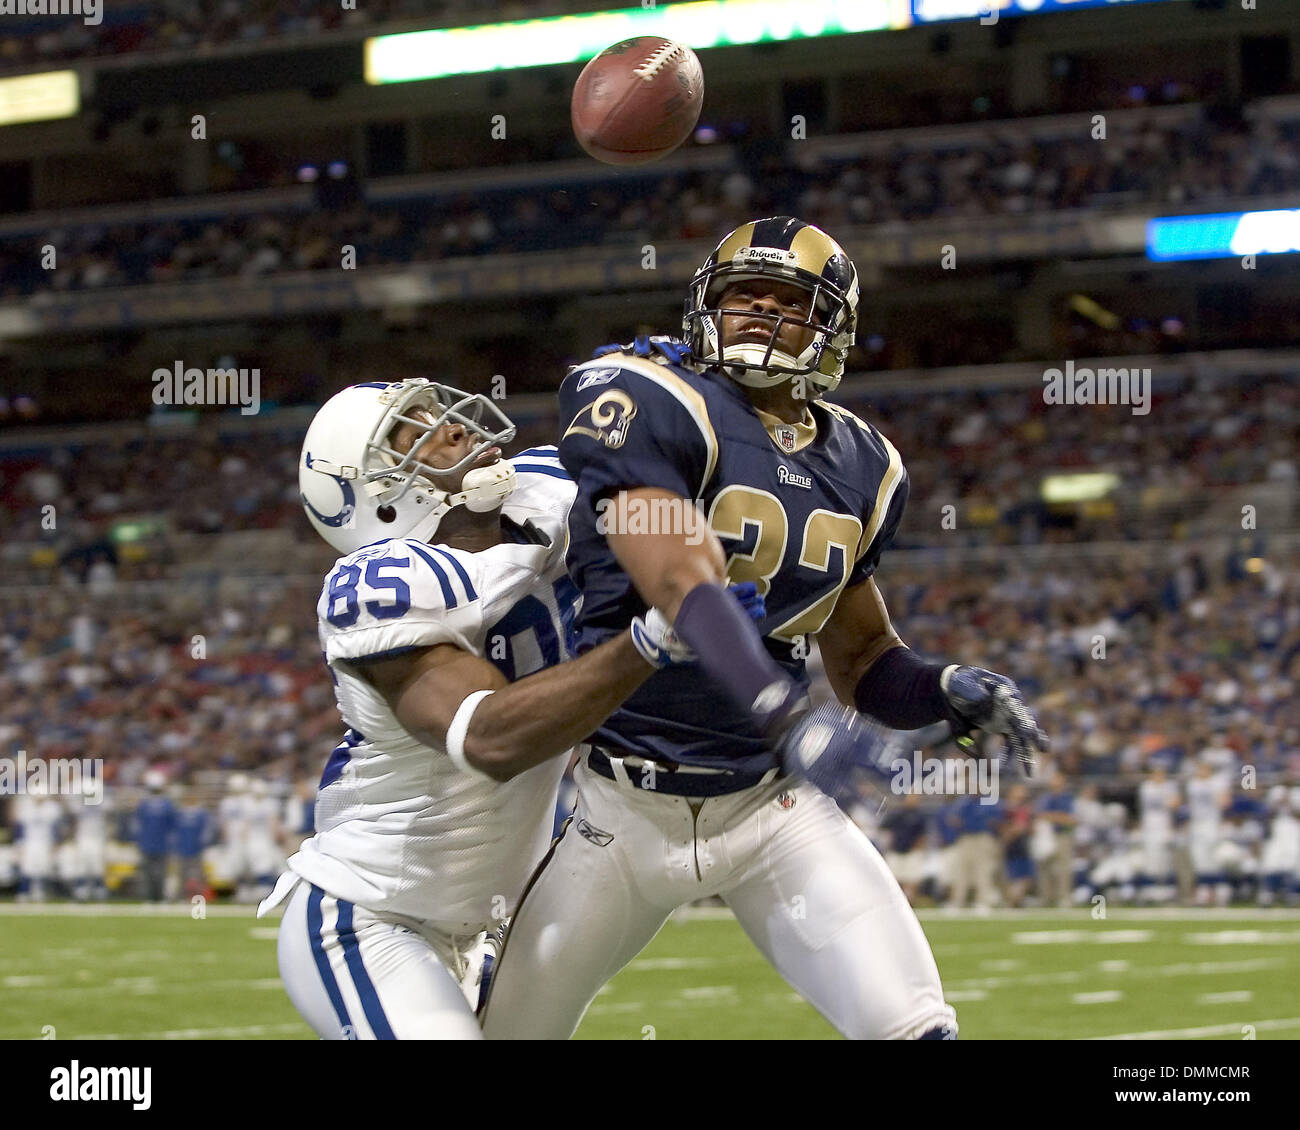 Oct 25, 2009 - St Louis, Missouri, USA - NFL Football - Rams defensive ...